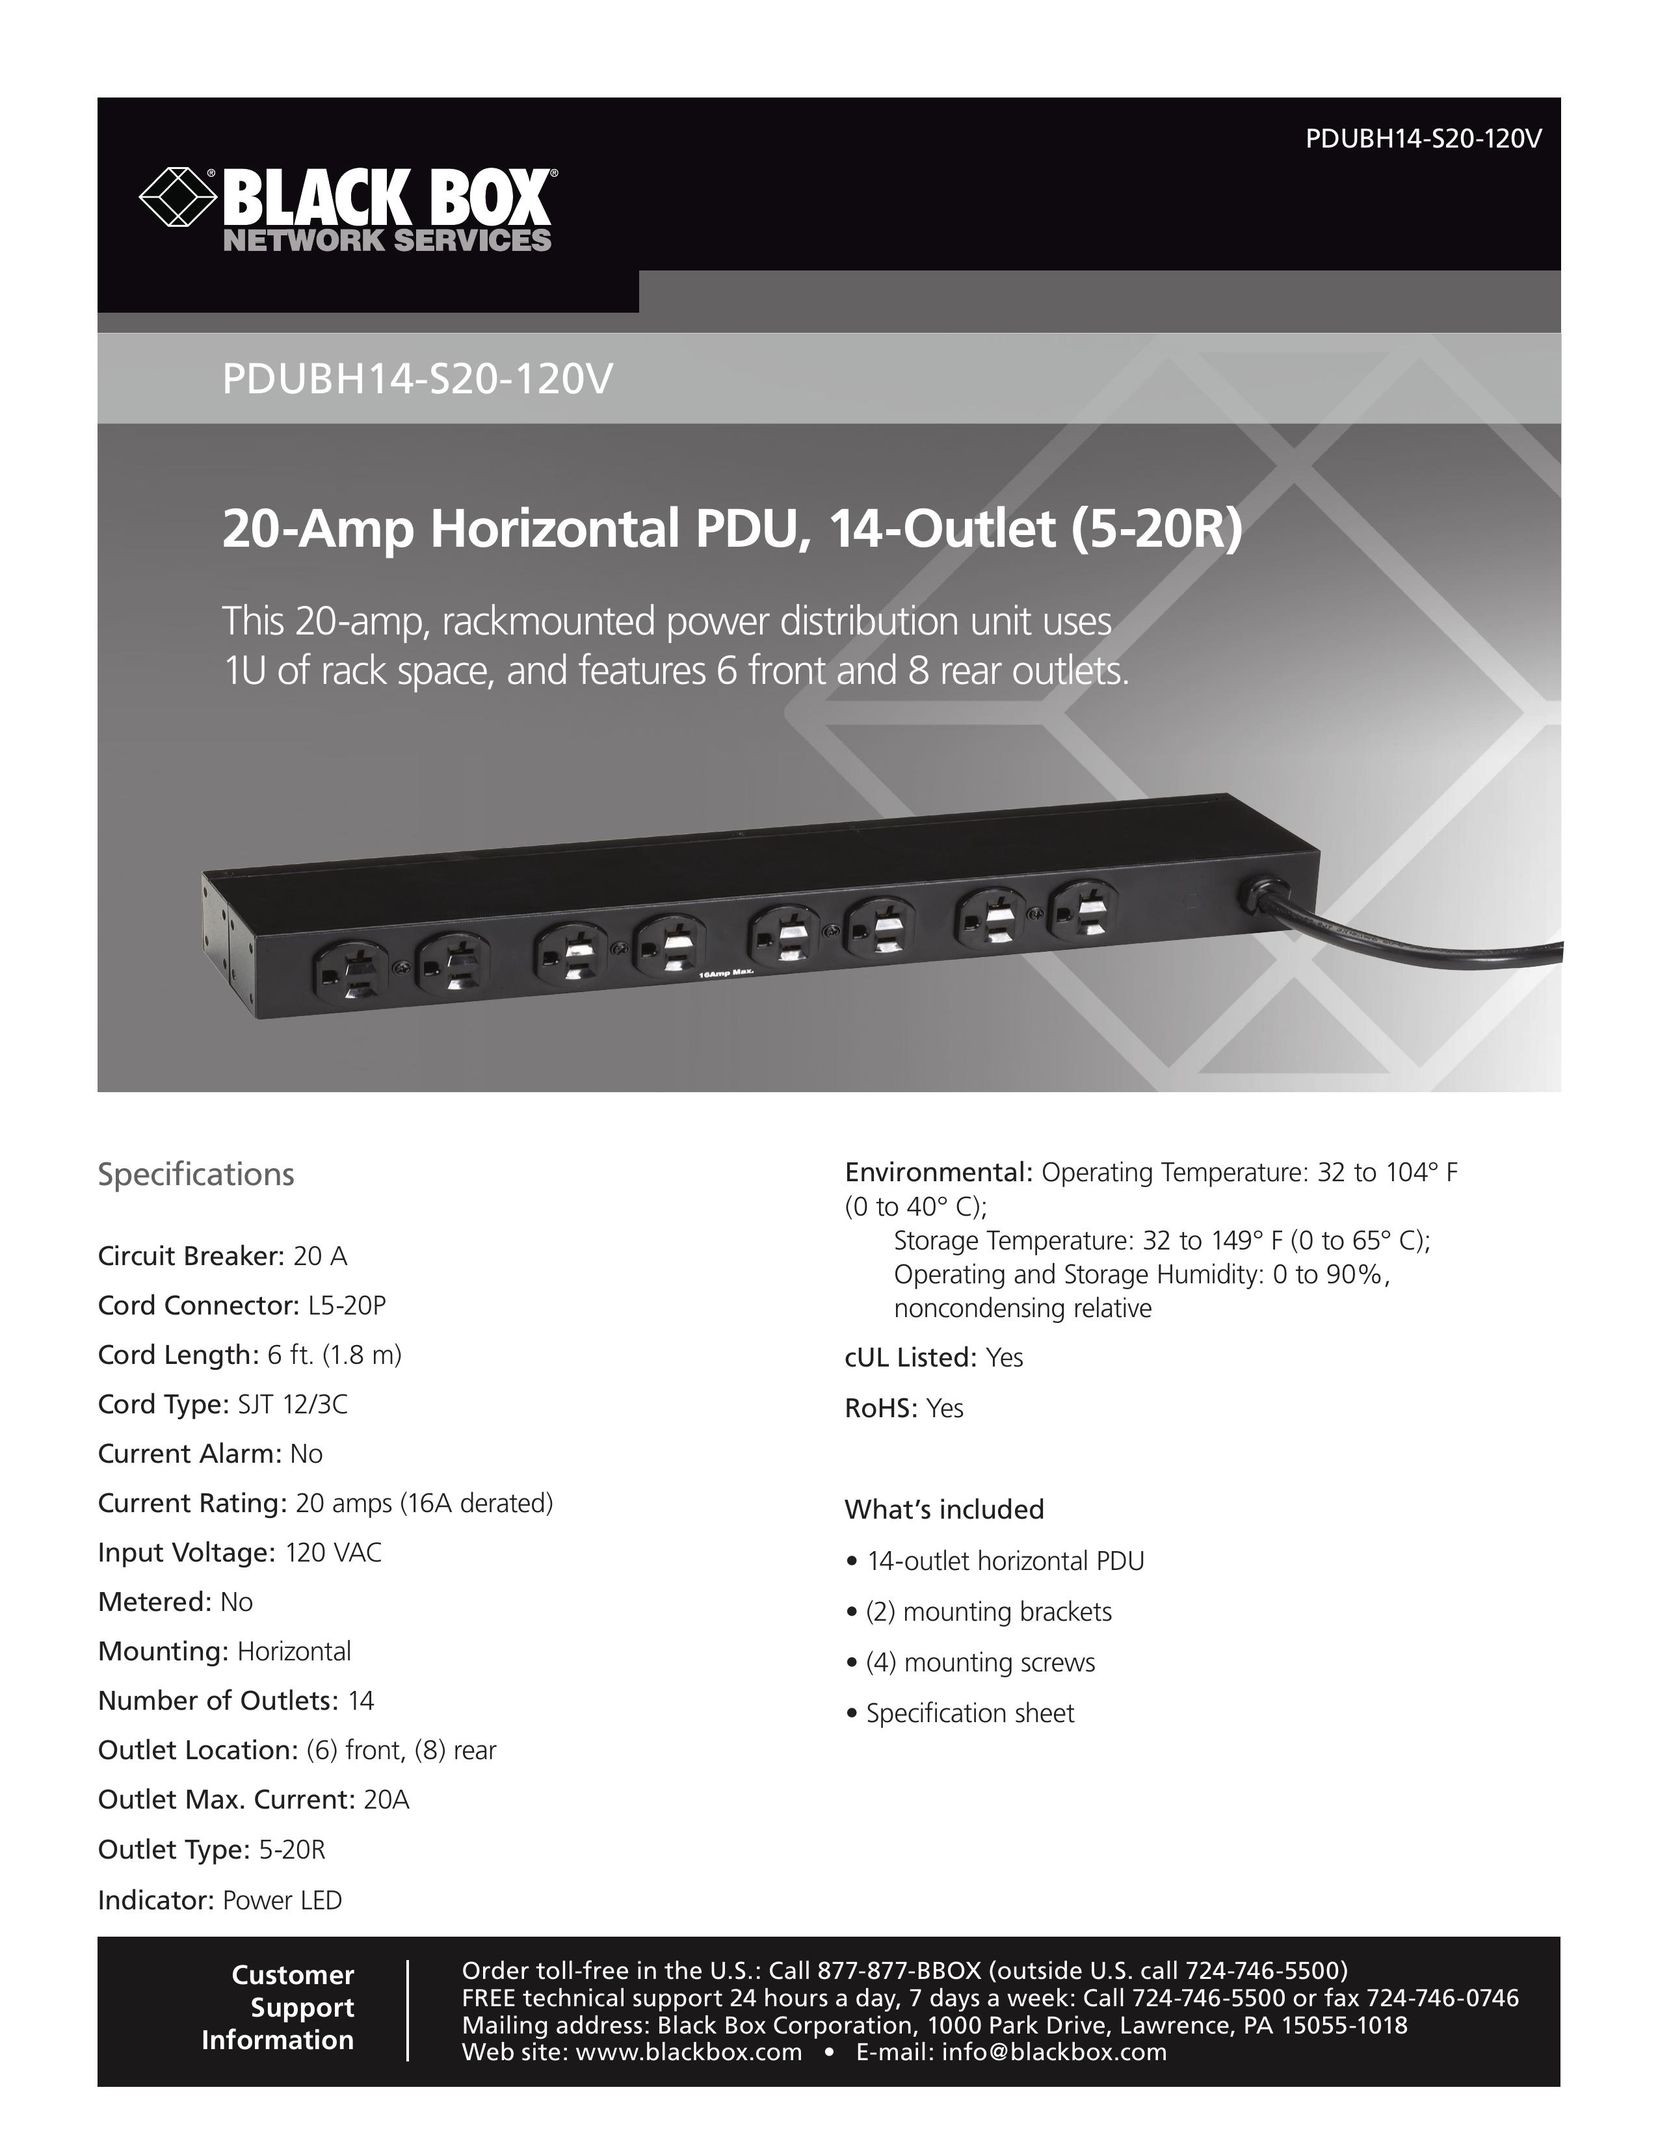 Black Box PDUBH14-S20-120V Power Supply User Manual